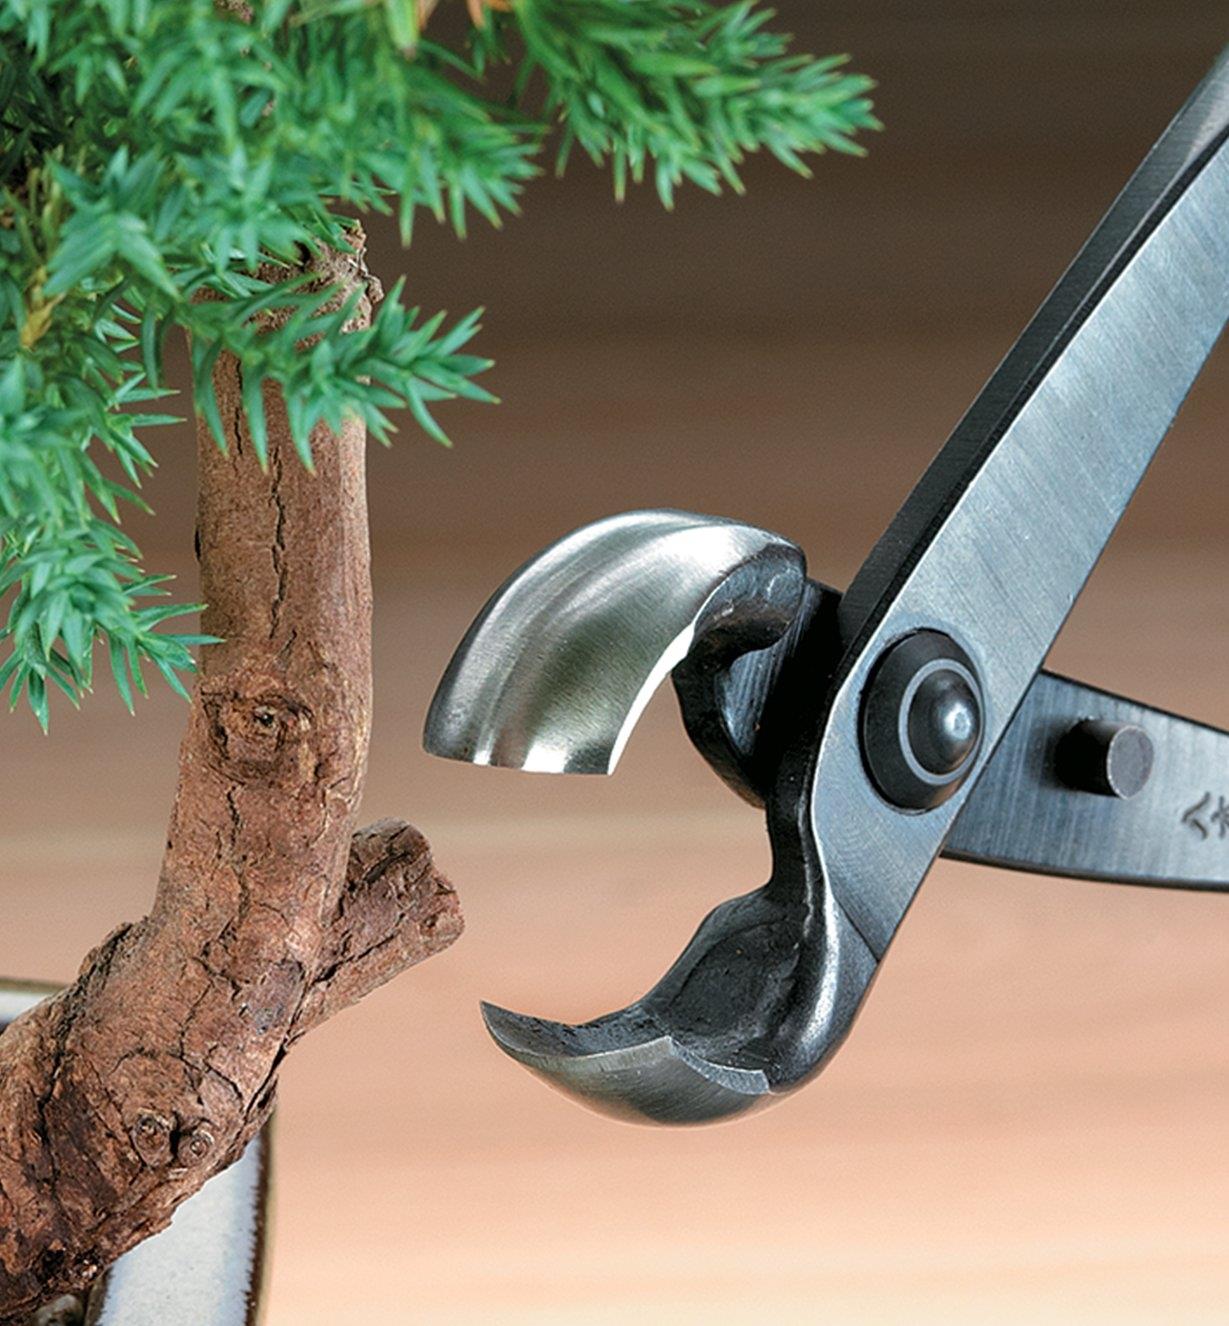 An open knob cutter about to cut a bonsai branch knob